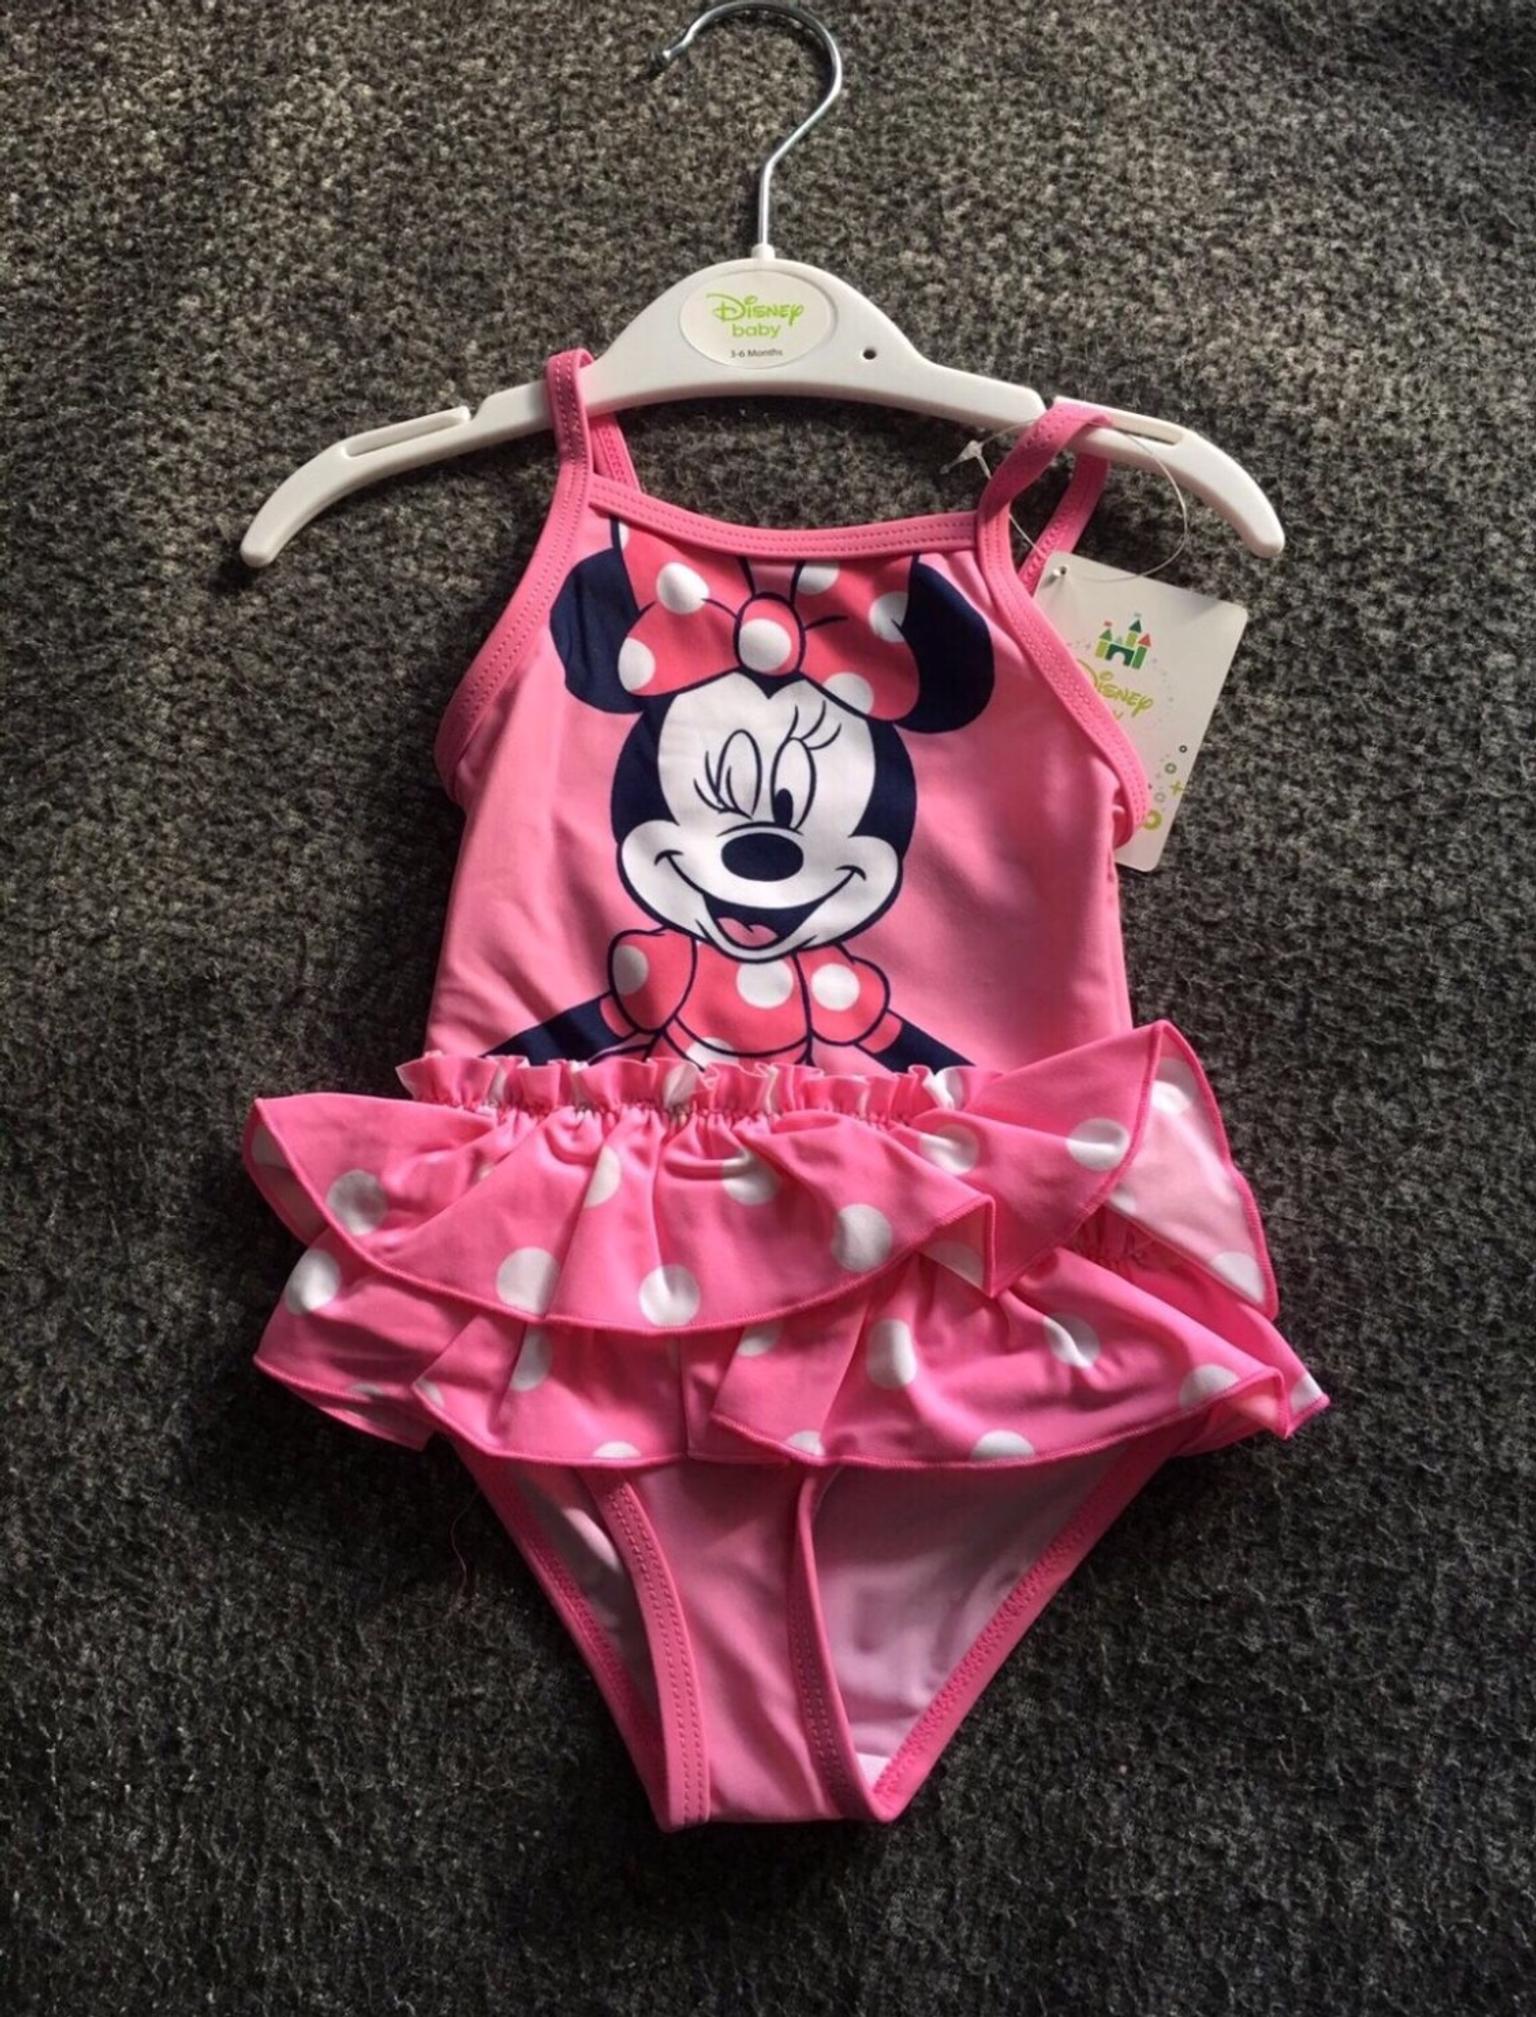 Minnie Mouse Baby Mädchen Badeanzug